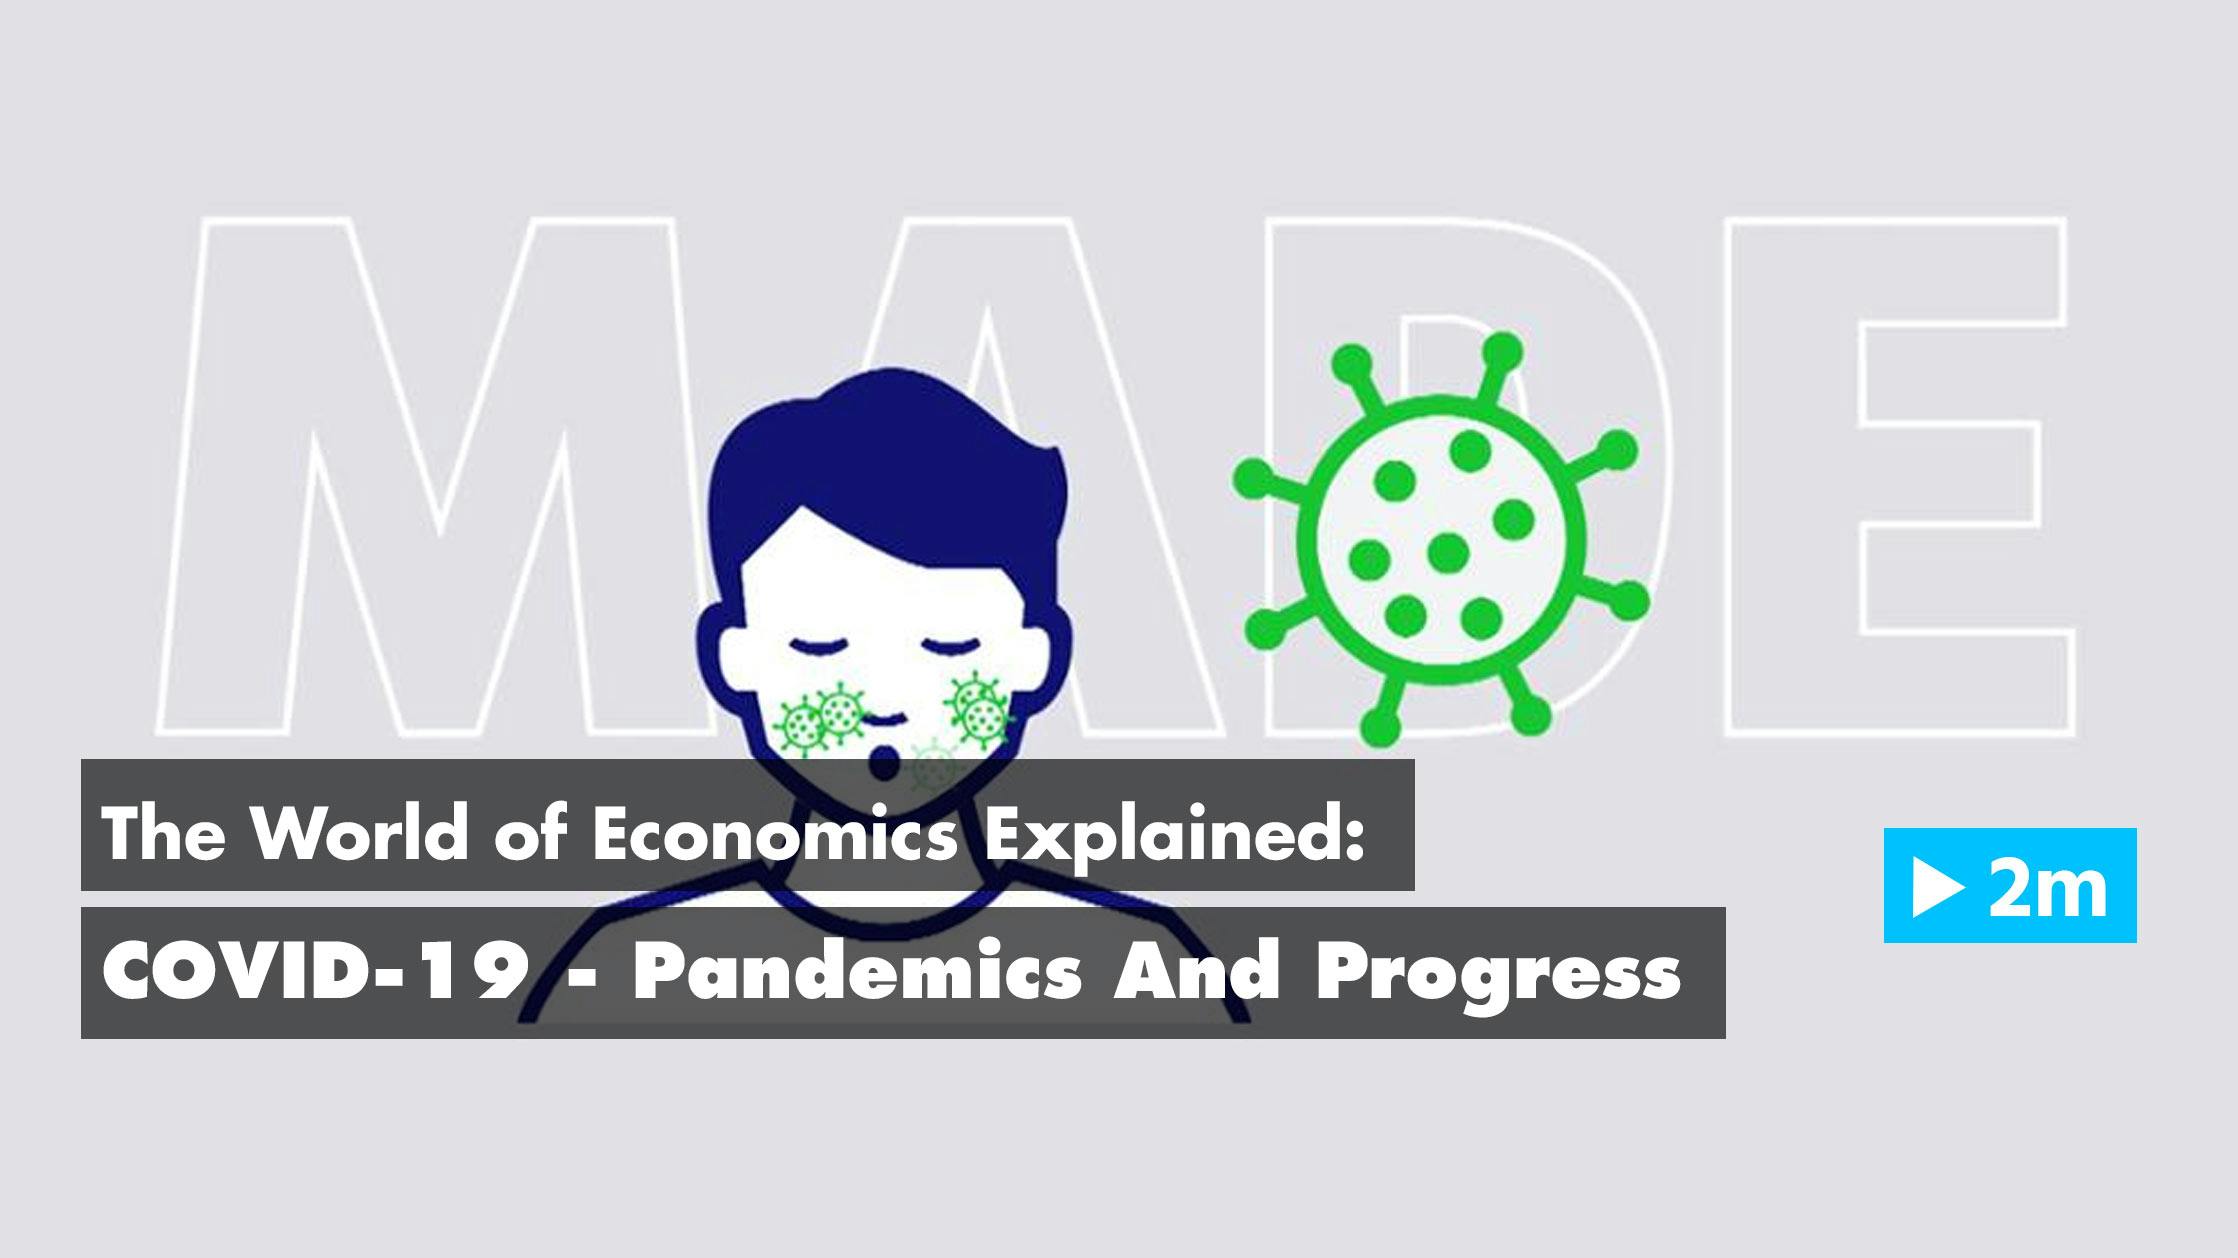 The World of Economics Explained: COVID-19 - Pandemics And Progress